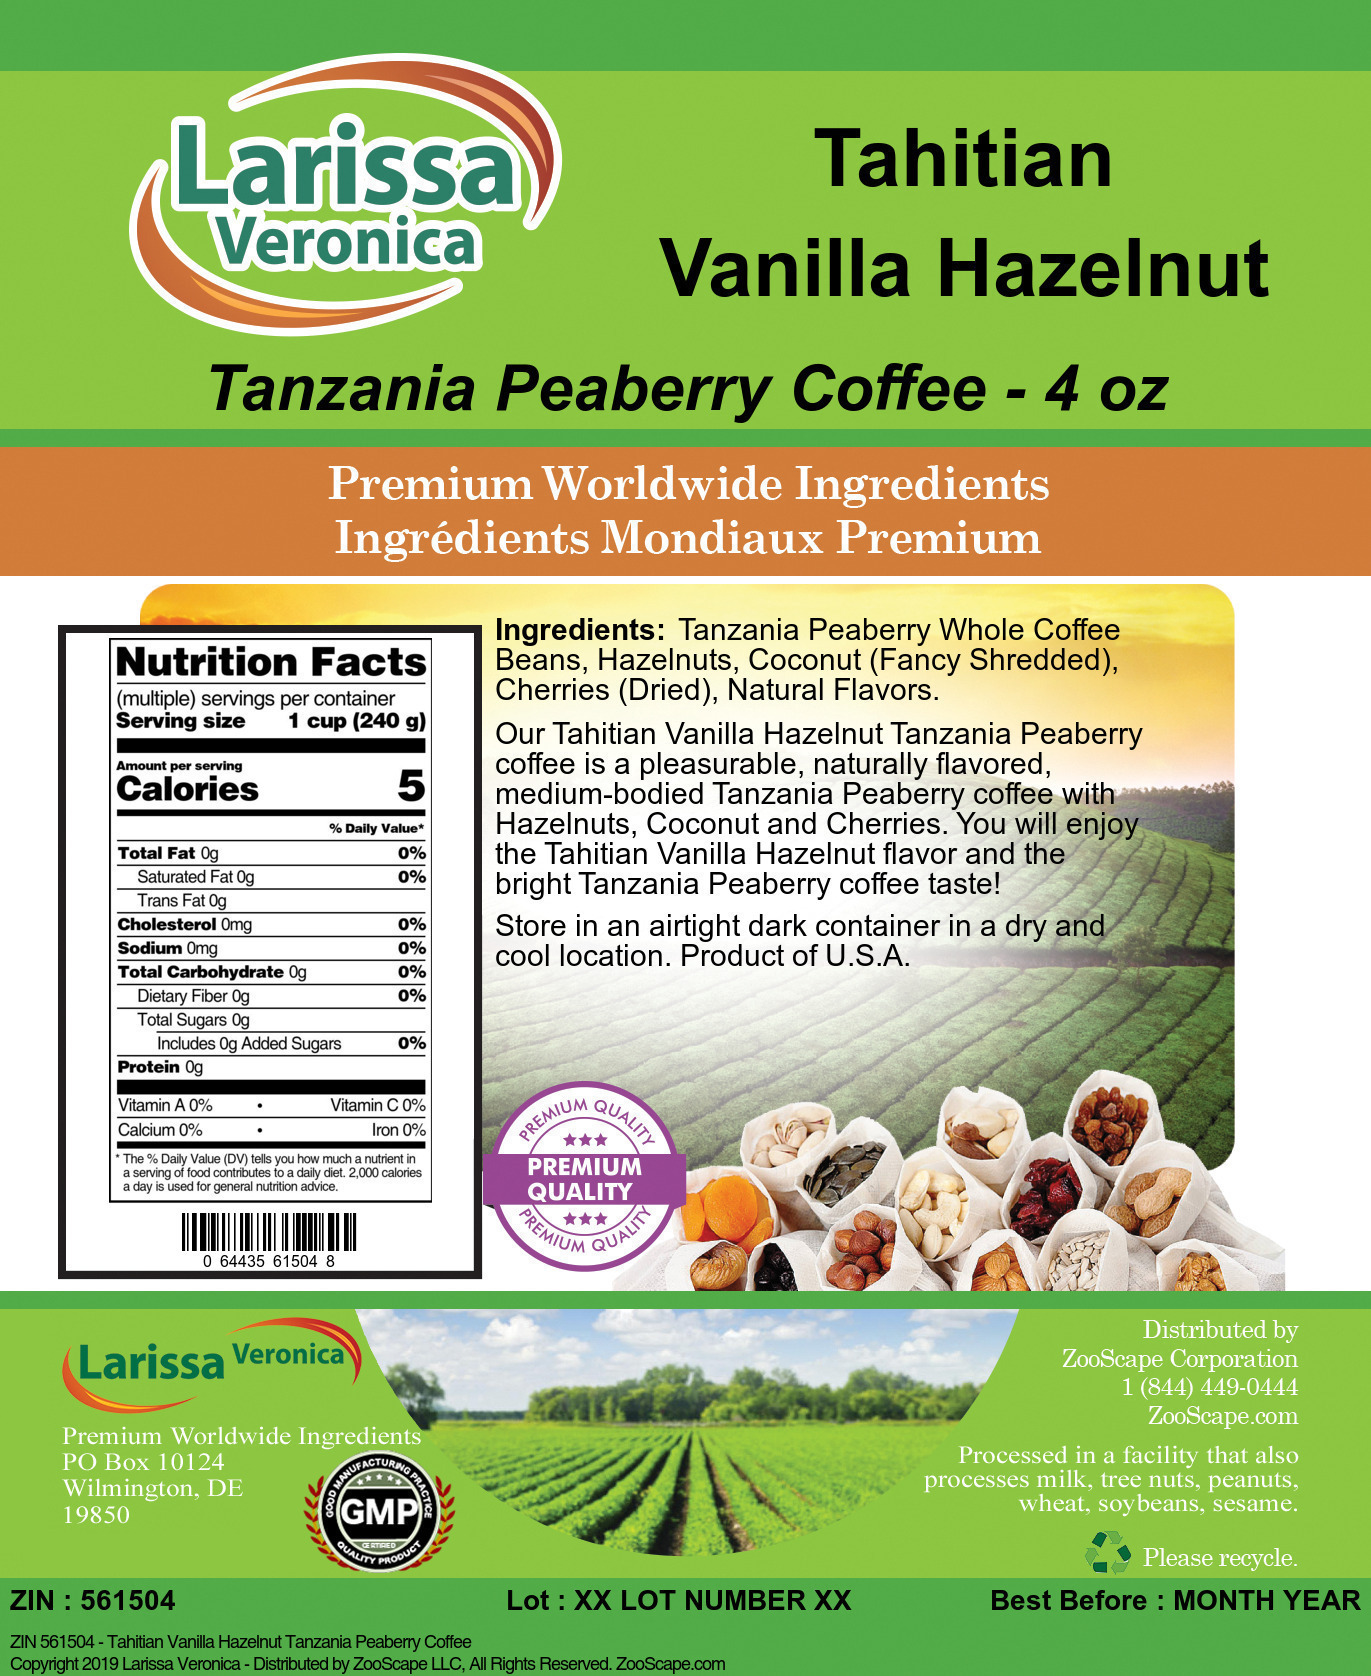 Tahitian Vanilla Hazelnut Tanzania Peaberry Coffee - Label